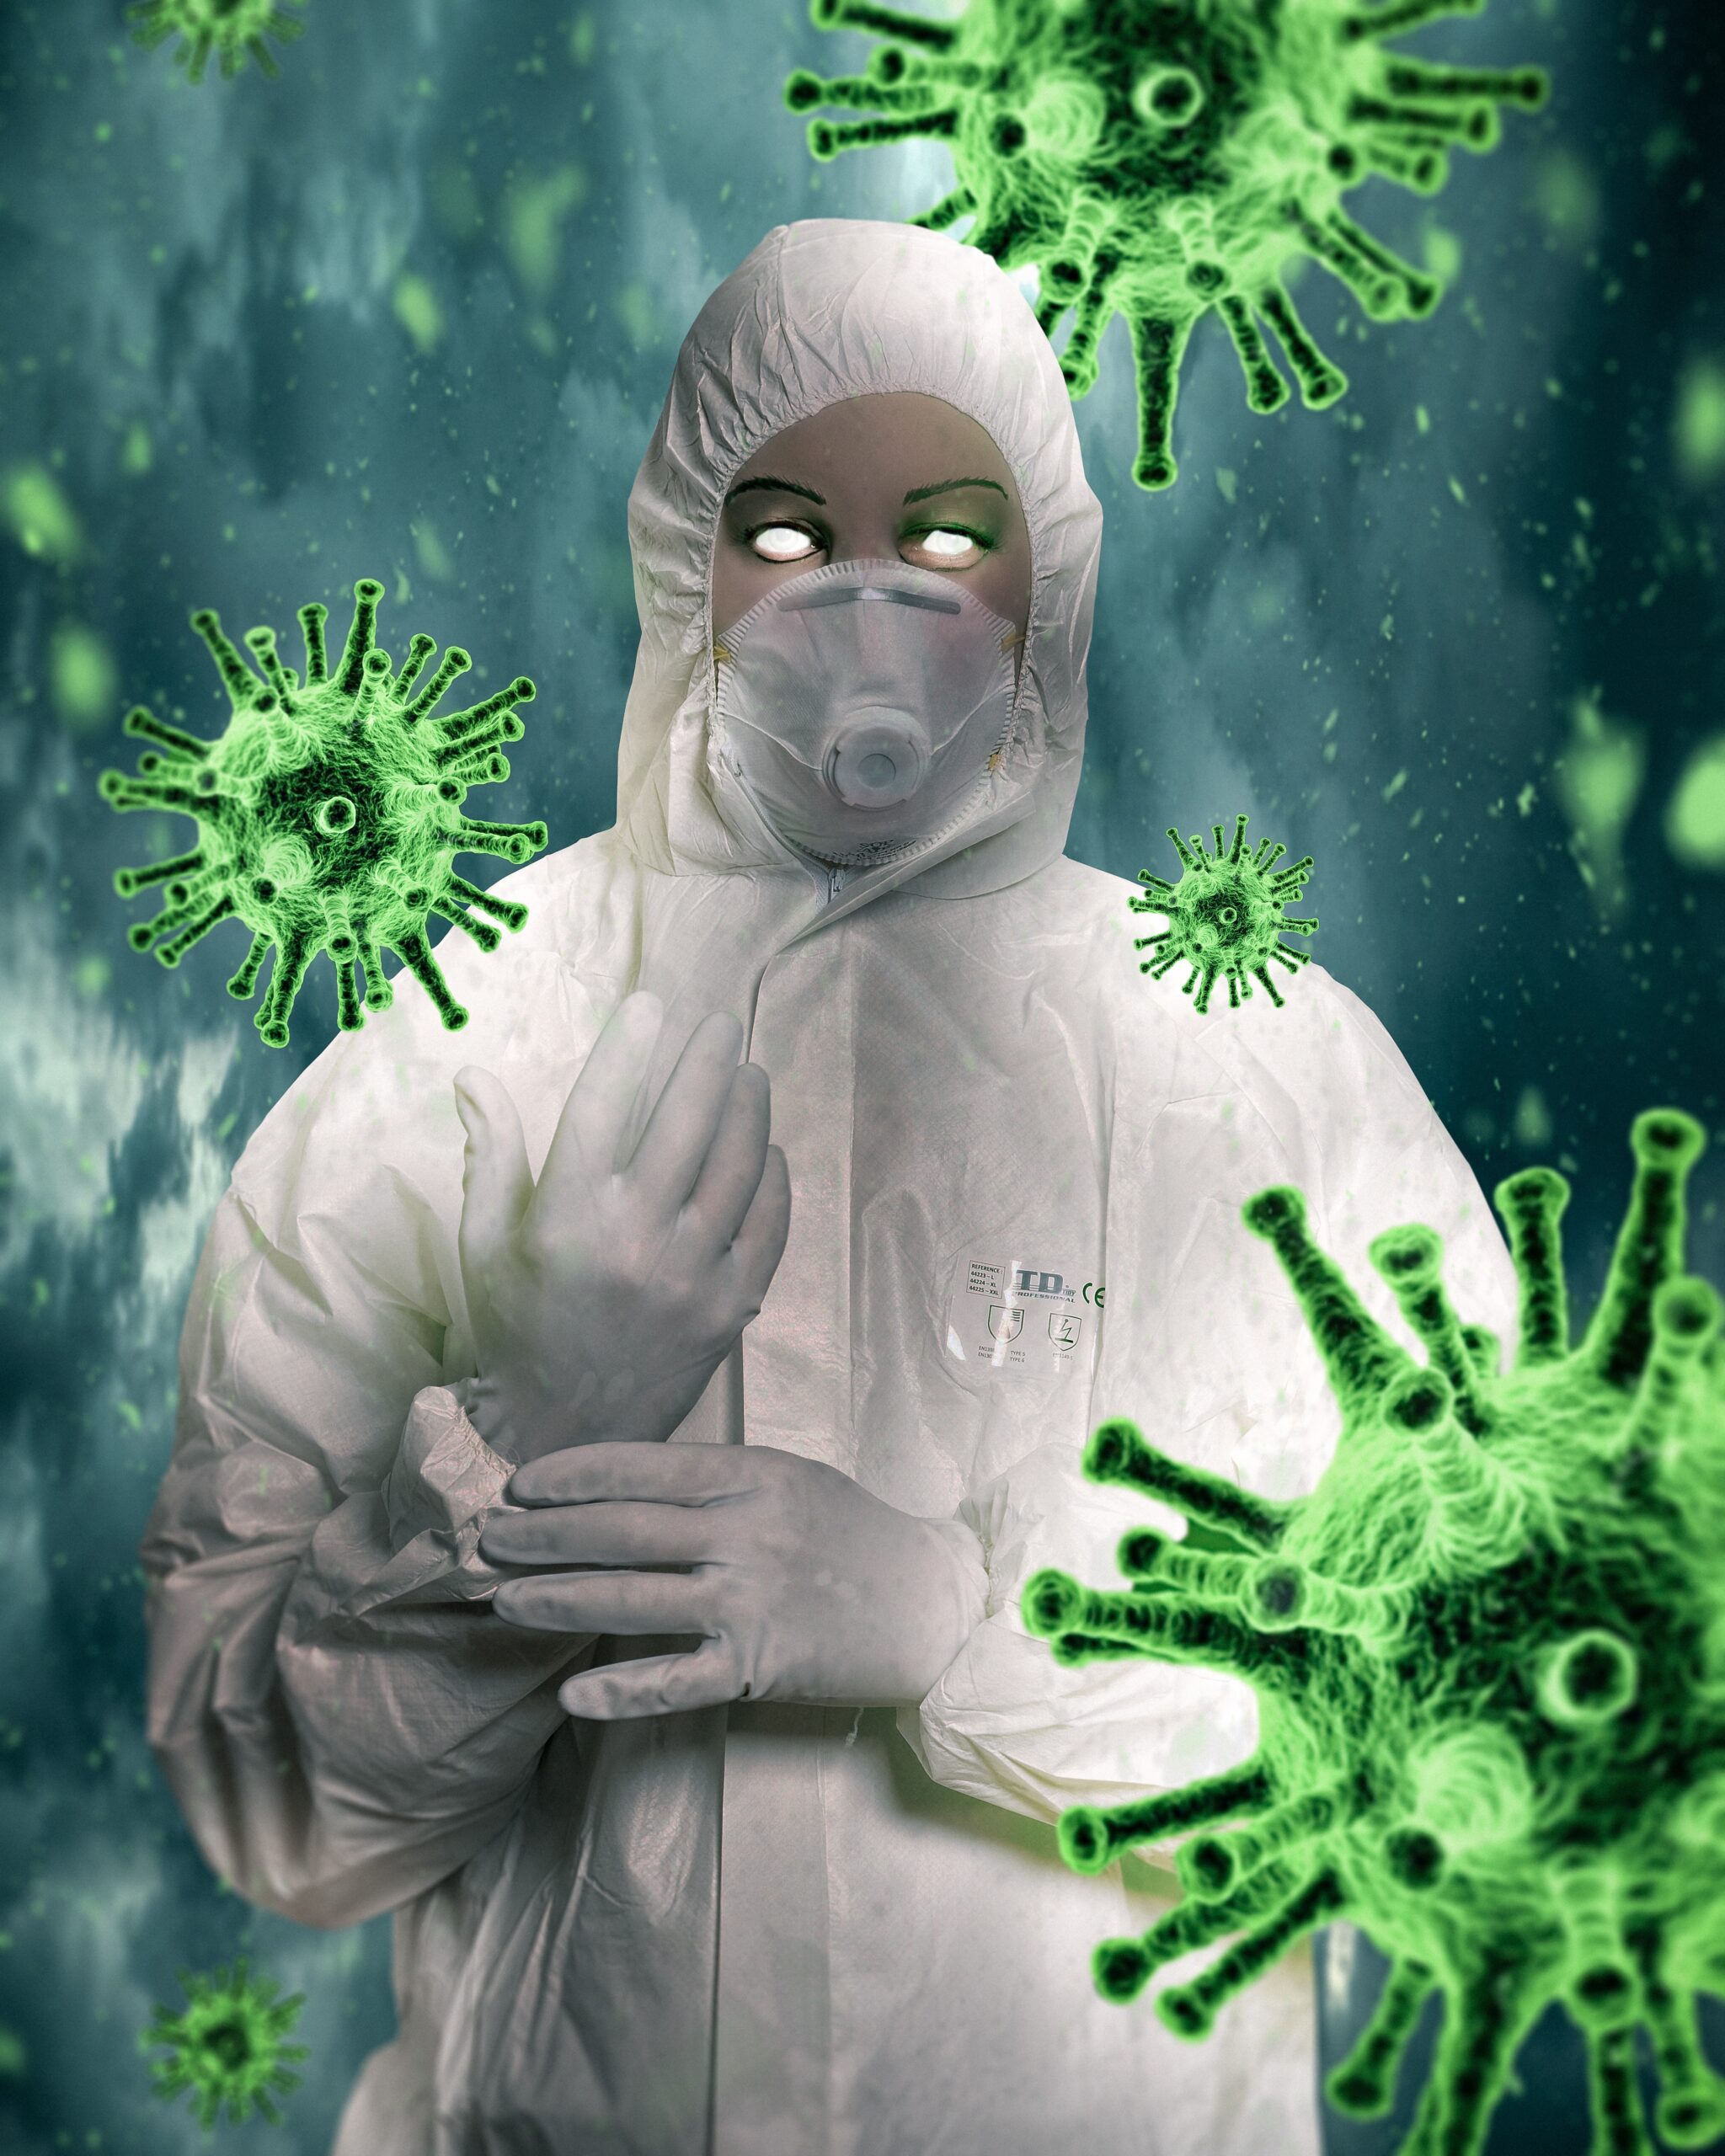 corona virus pandemic stockpack pixabay